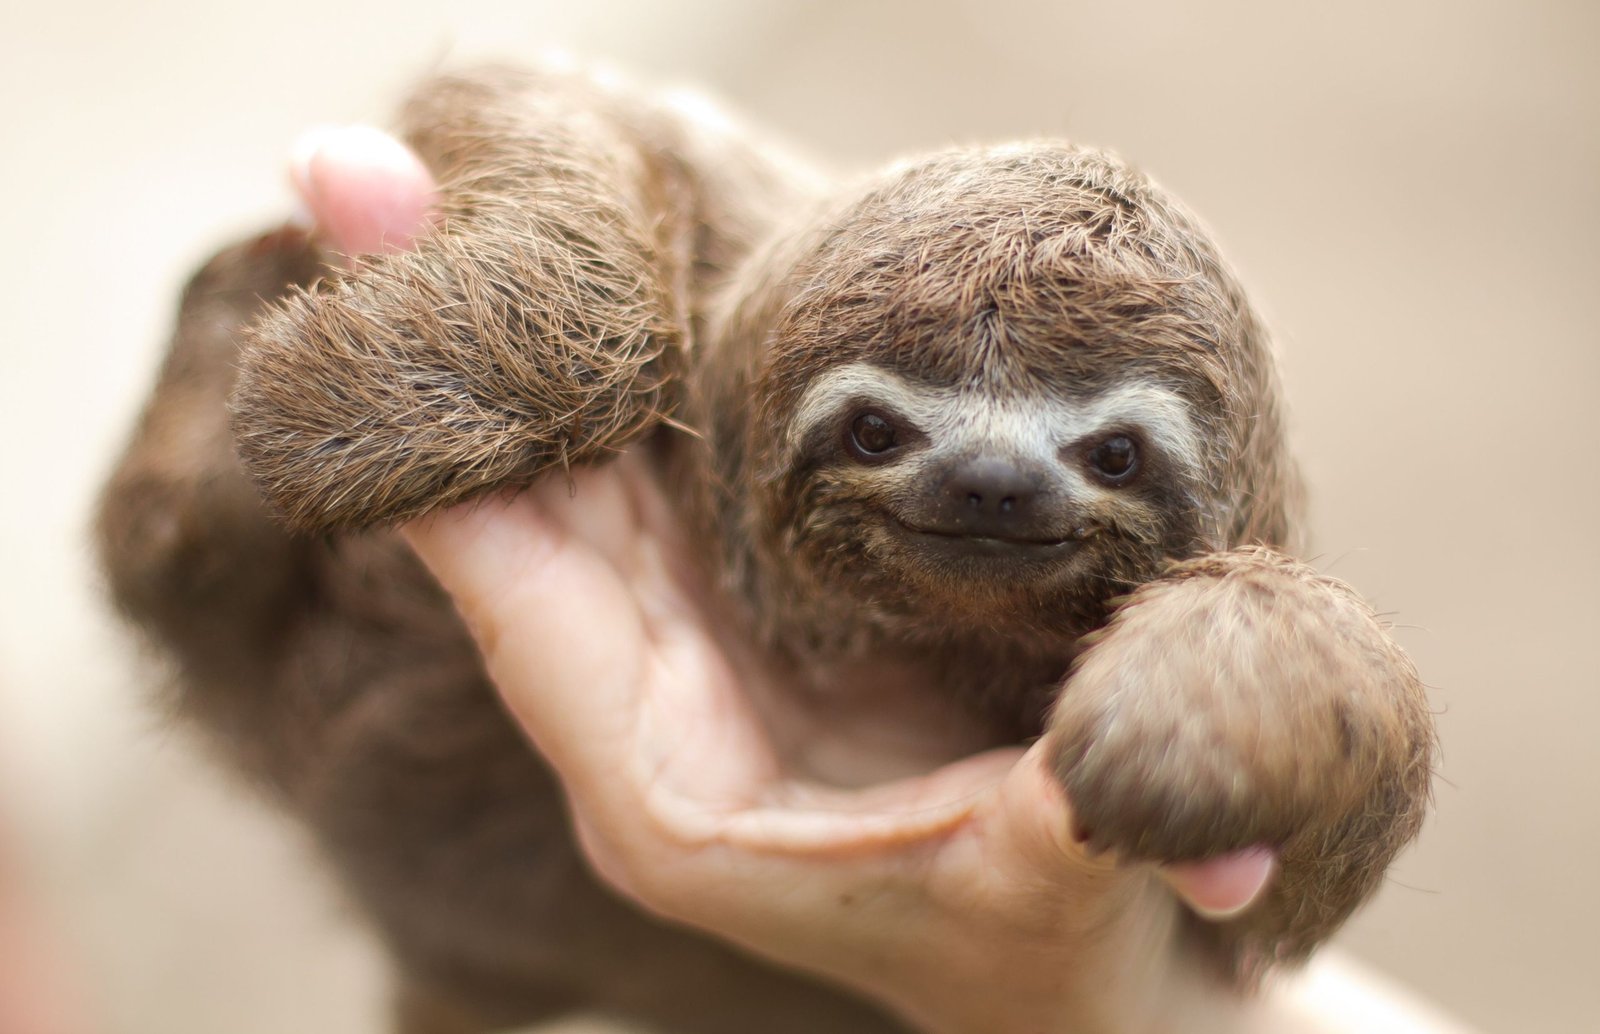 Should You Keep a Sloth As a Pet?